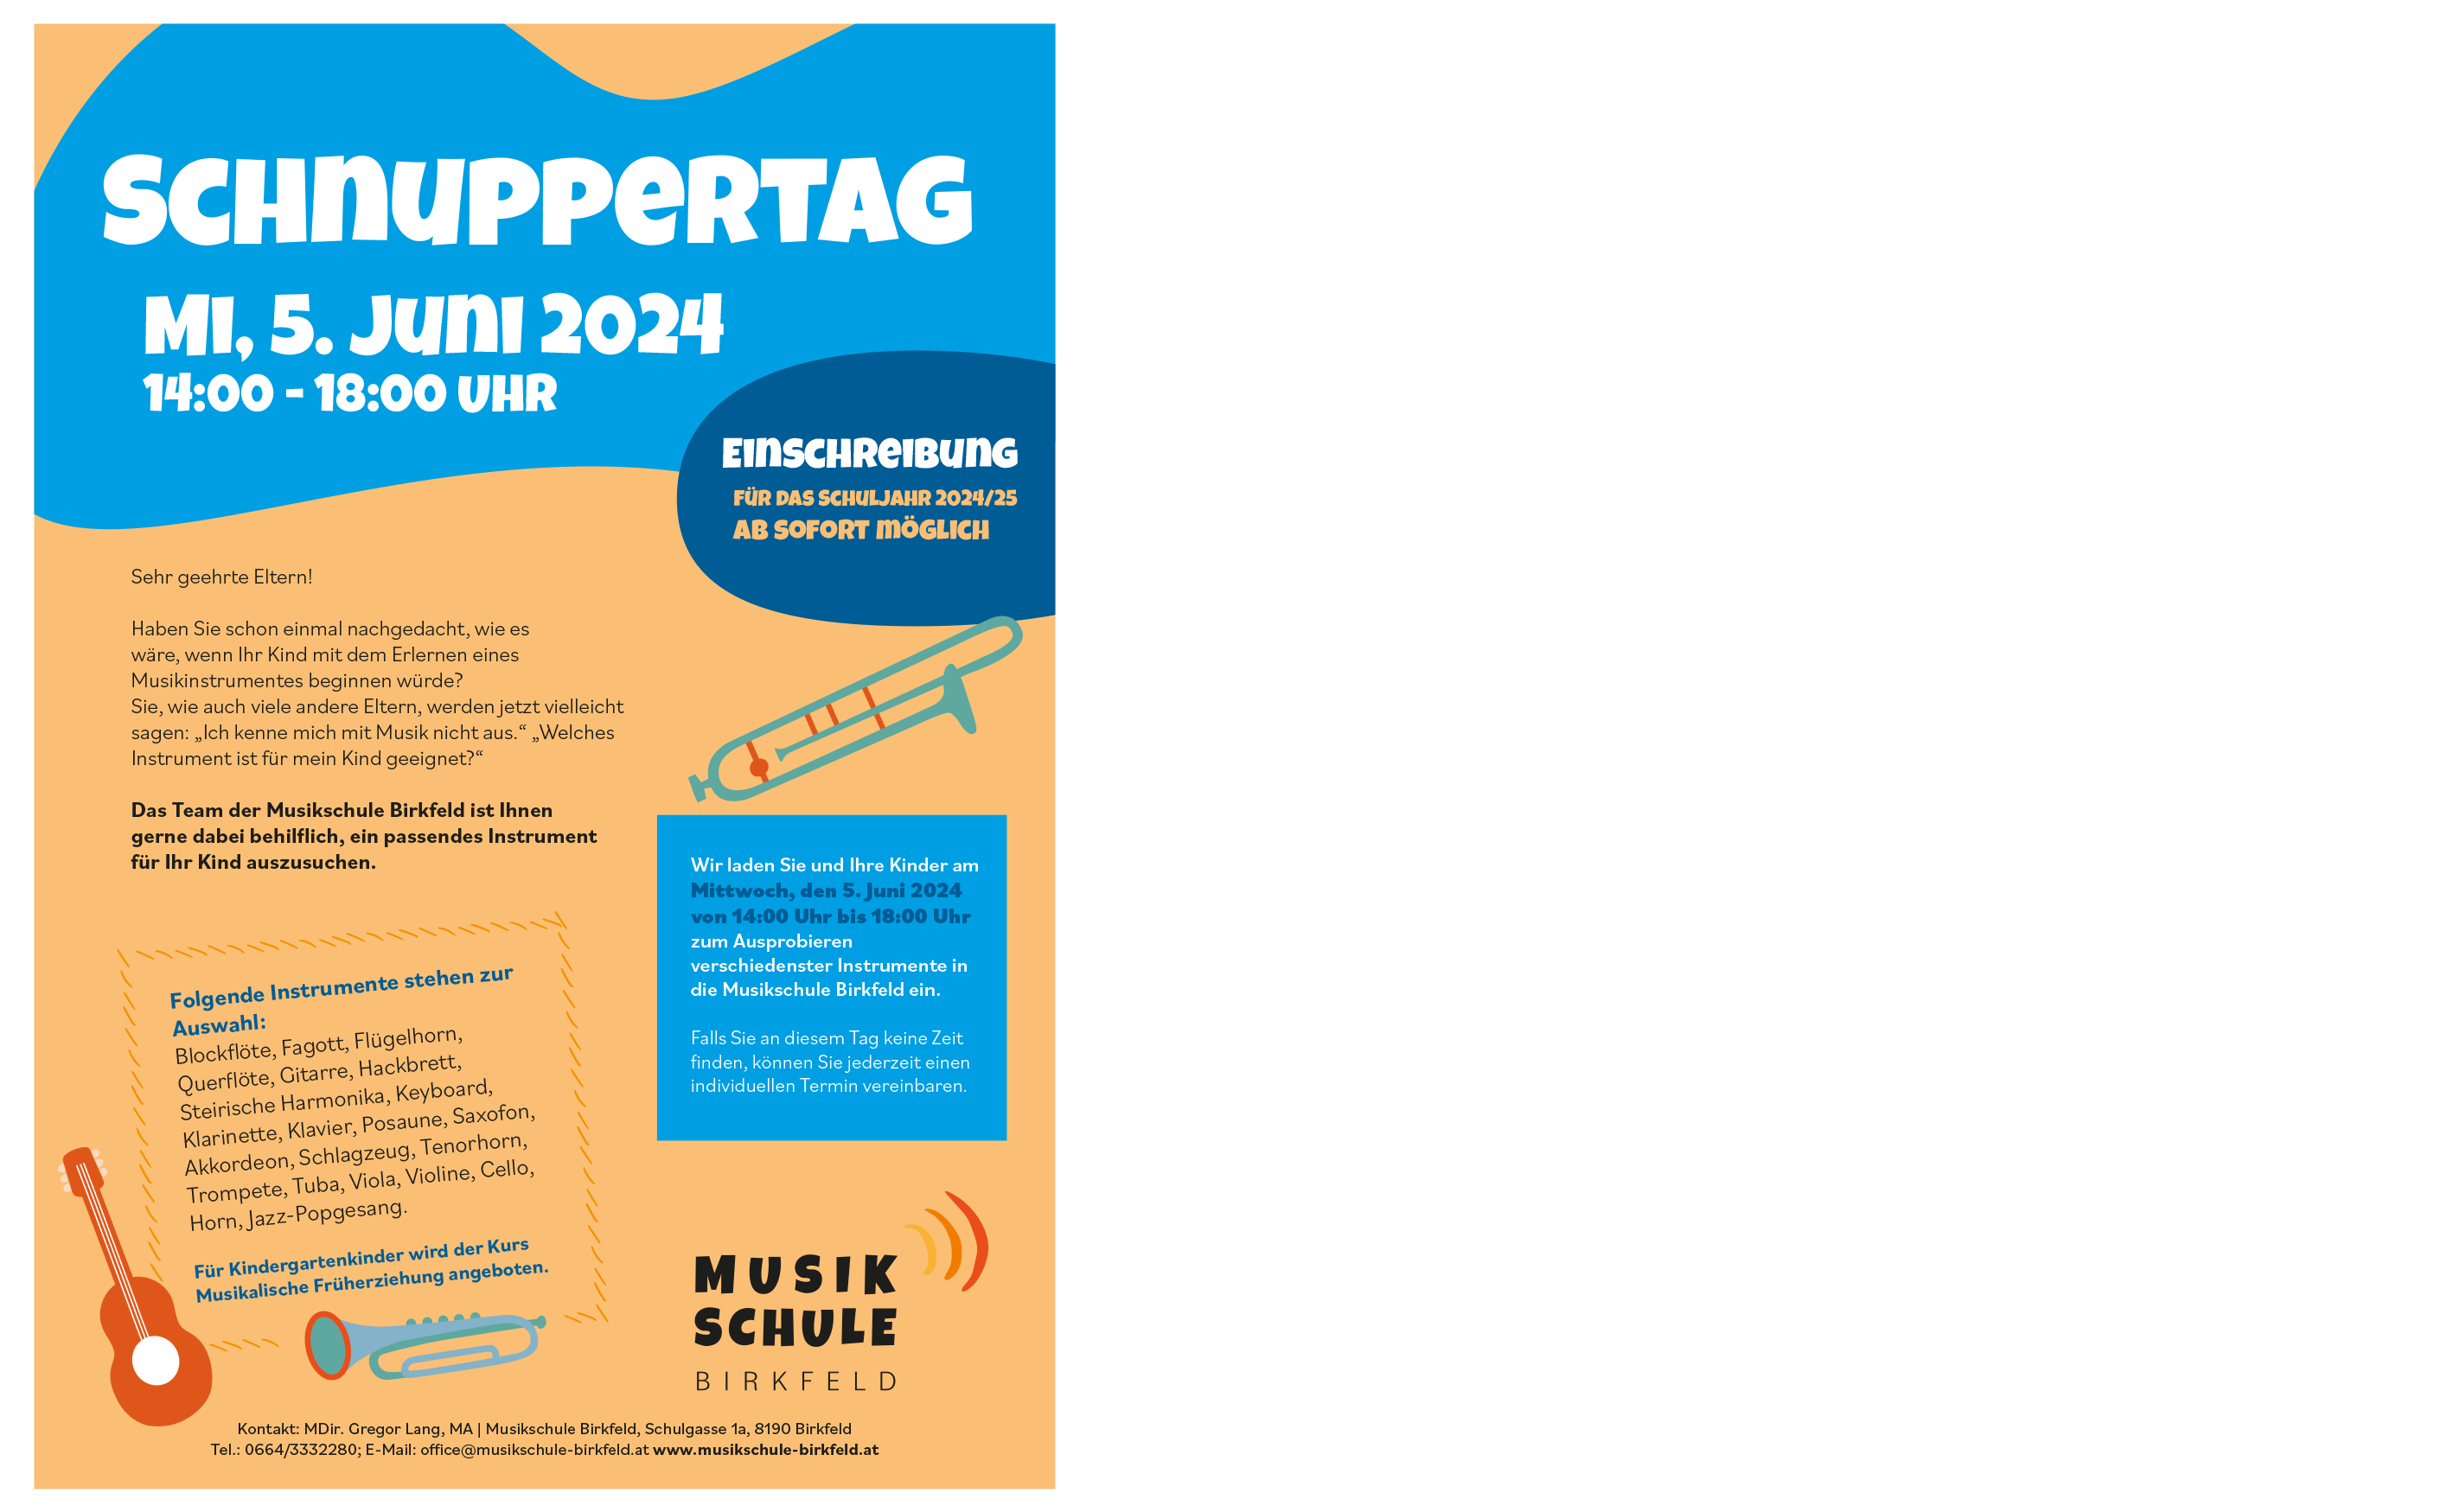 musikschule-birkfeldat--article-1393-0.png